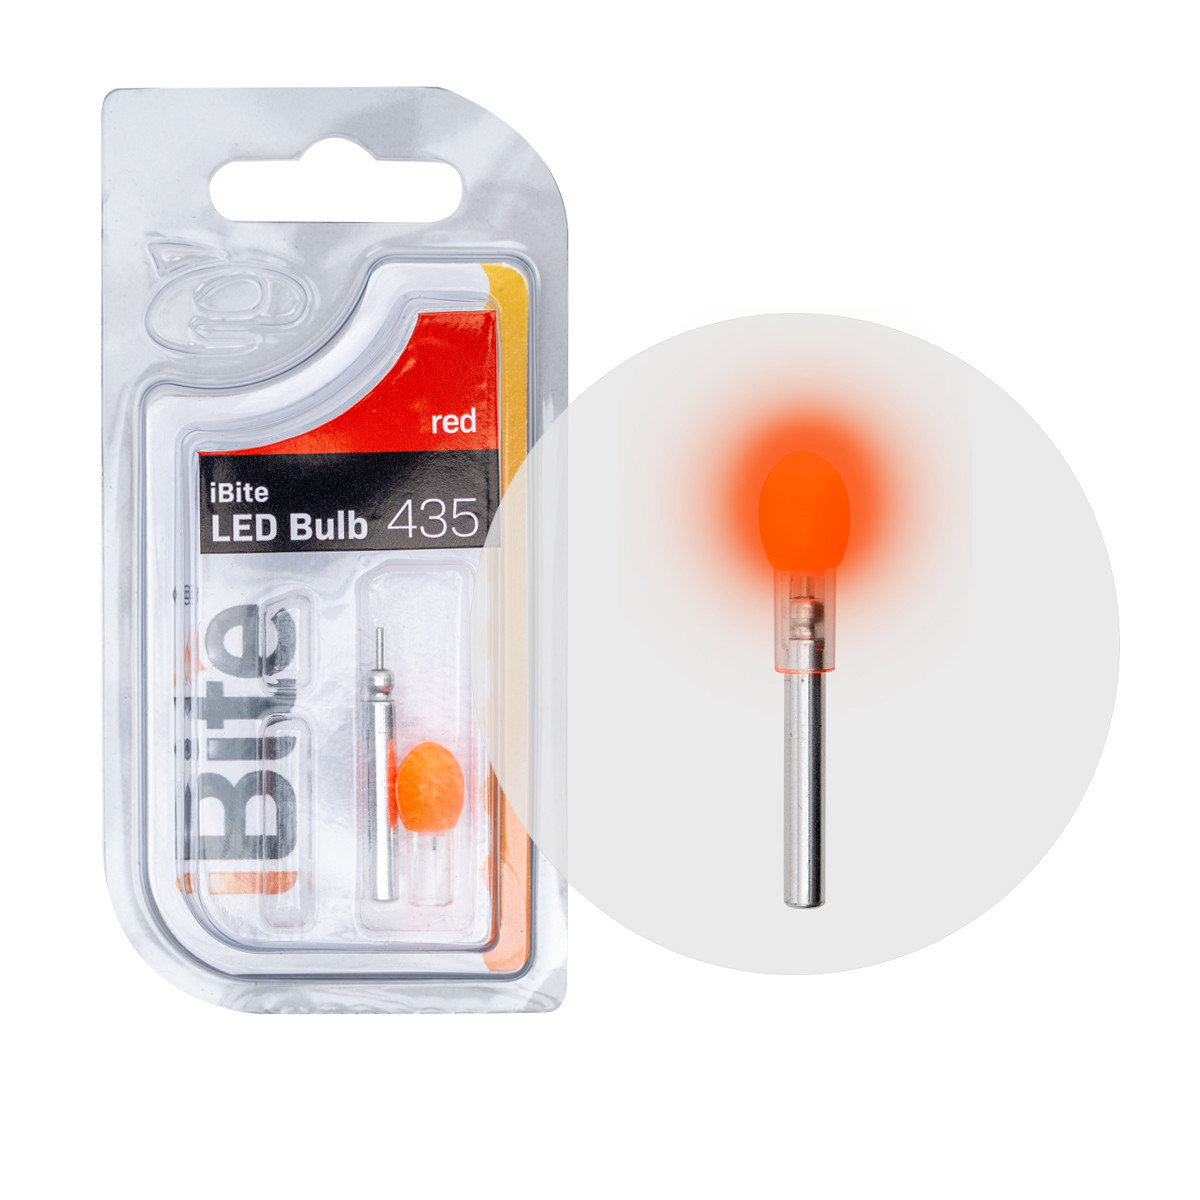 Indicator luminos Ibite Bulb Pack cu baterie 435 (Culoare: Verde) 435